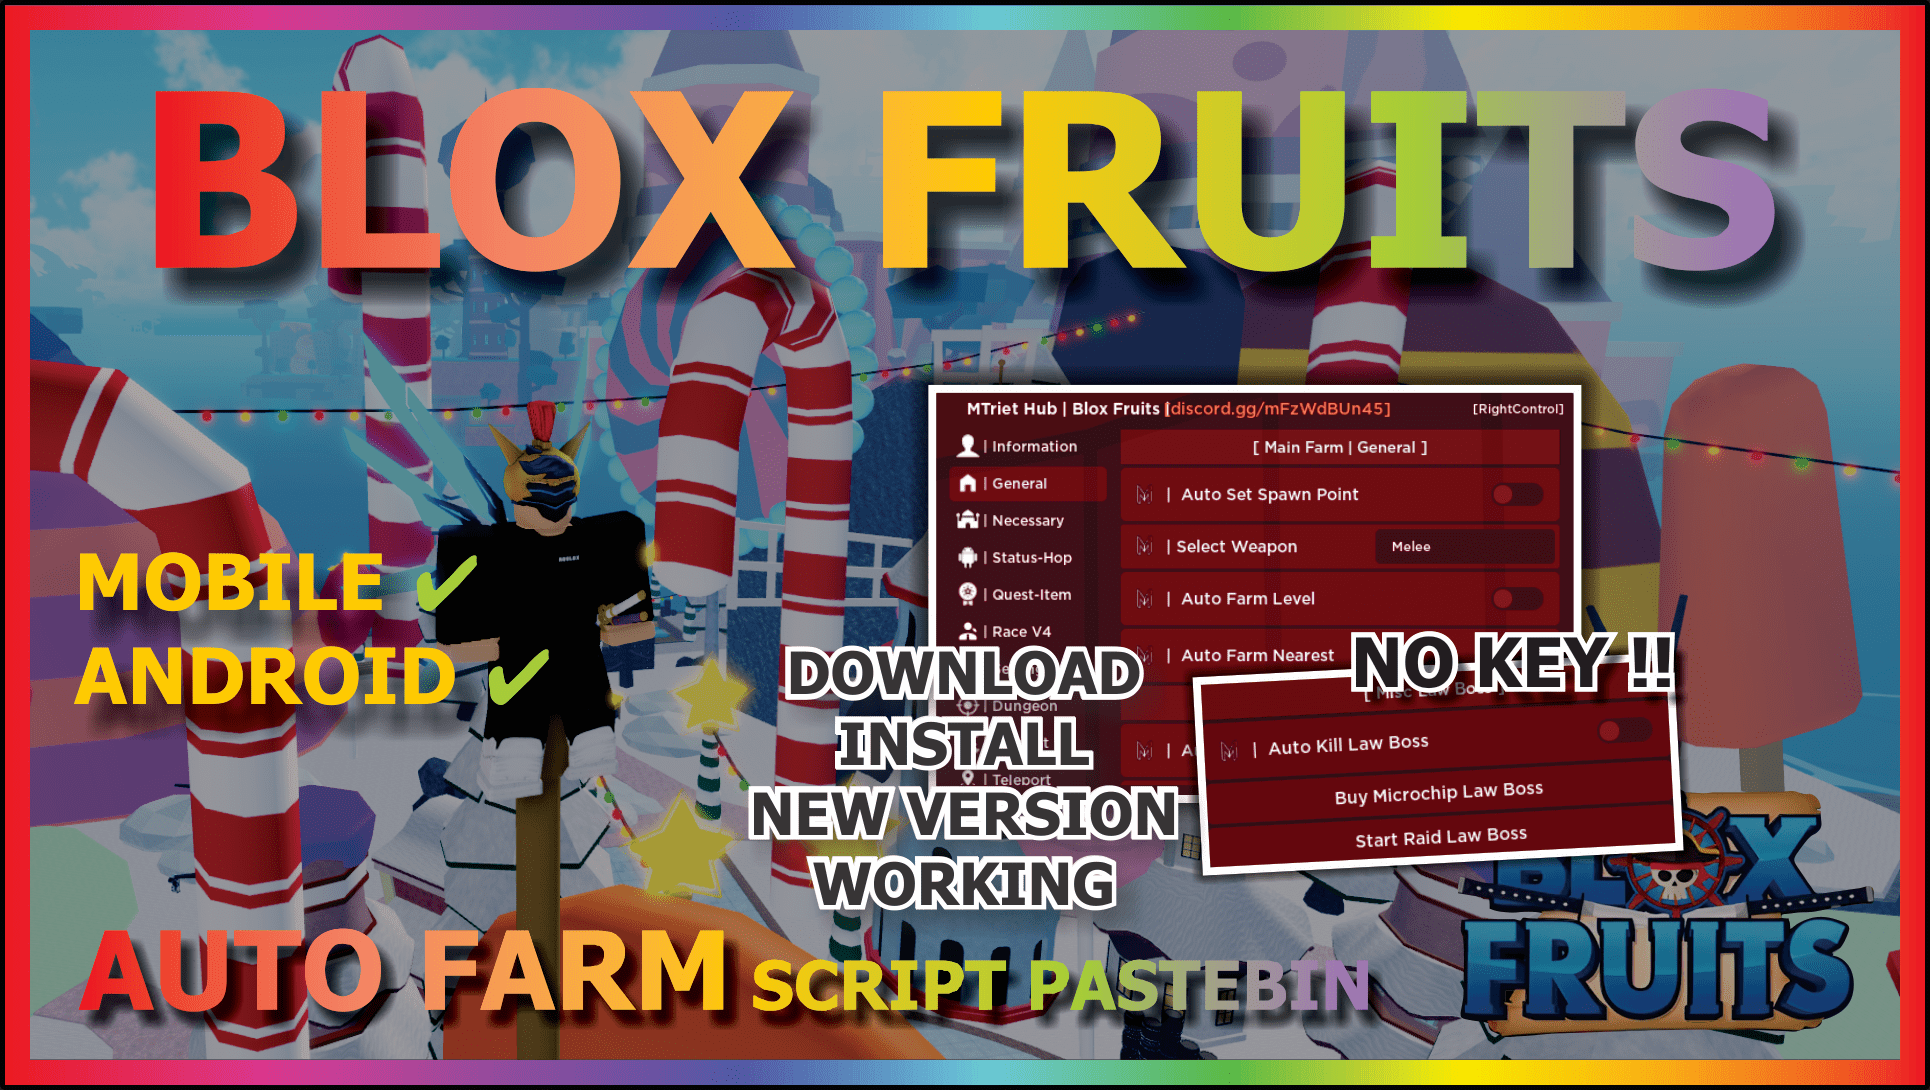 download de script de blox fruits mobile